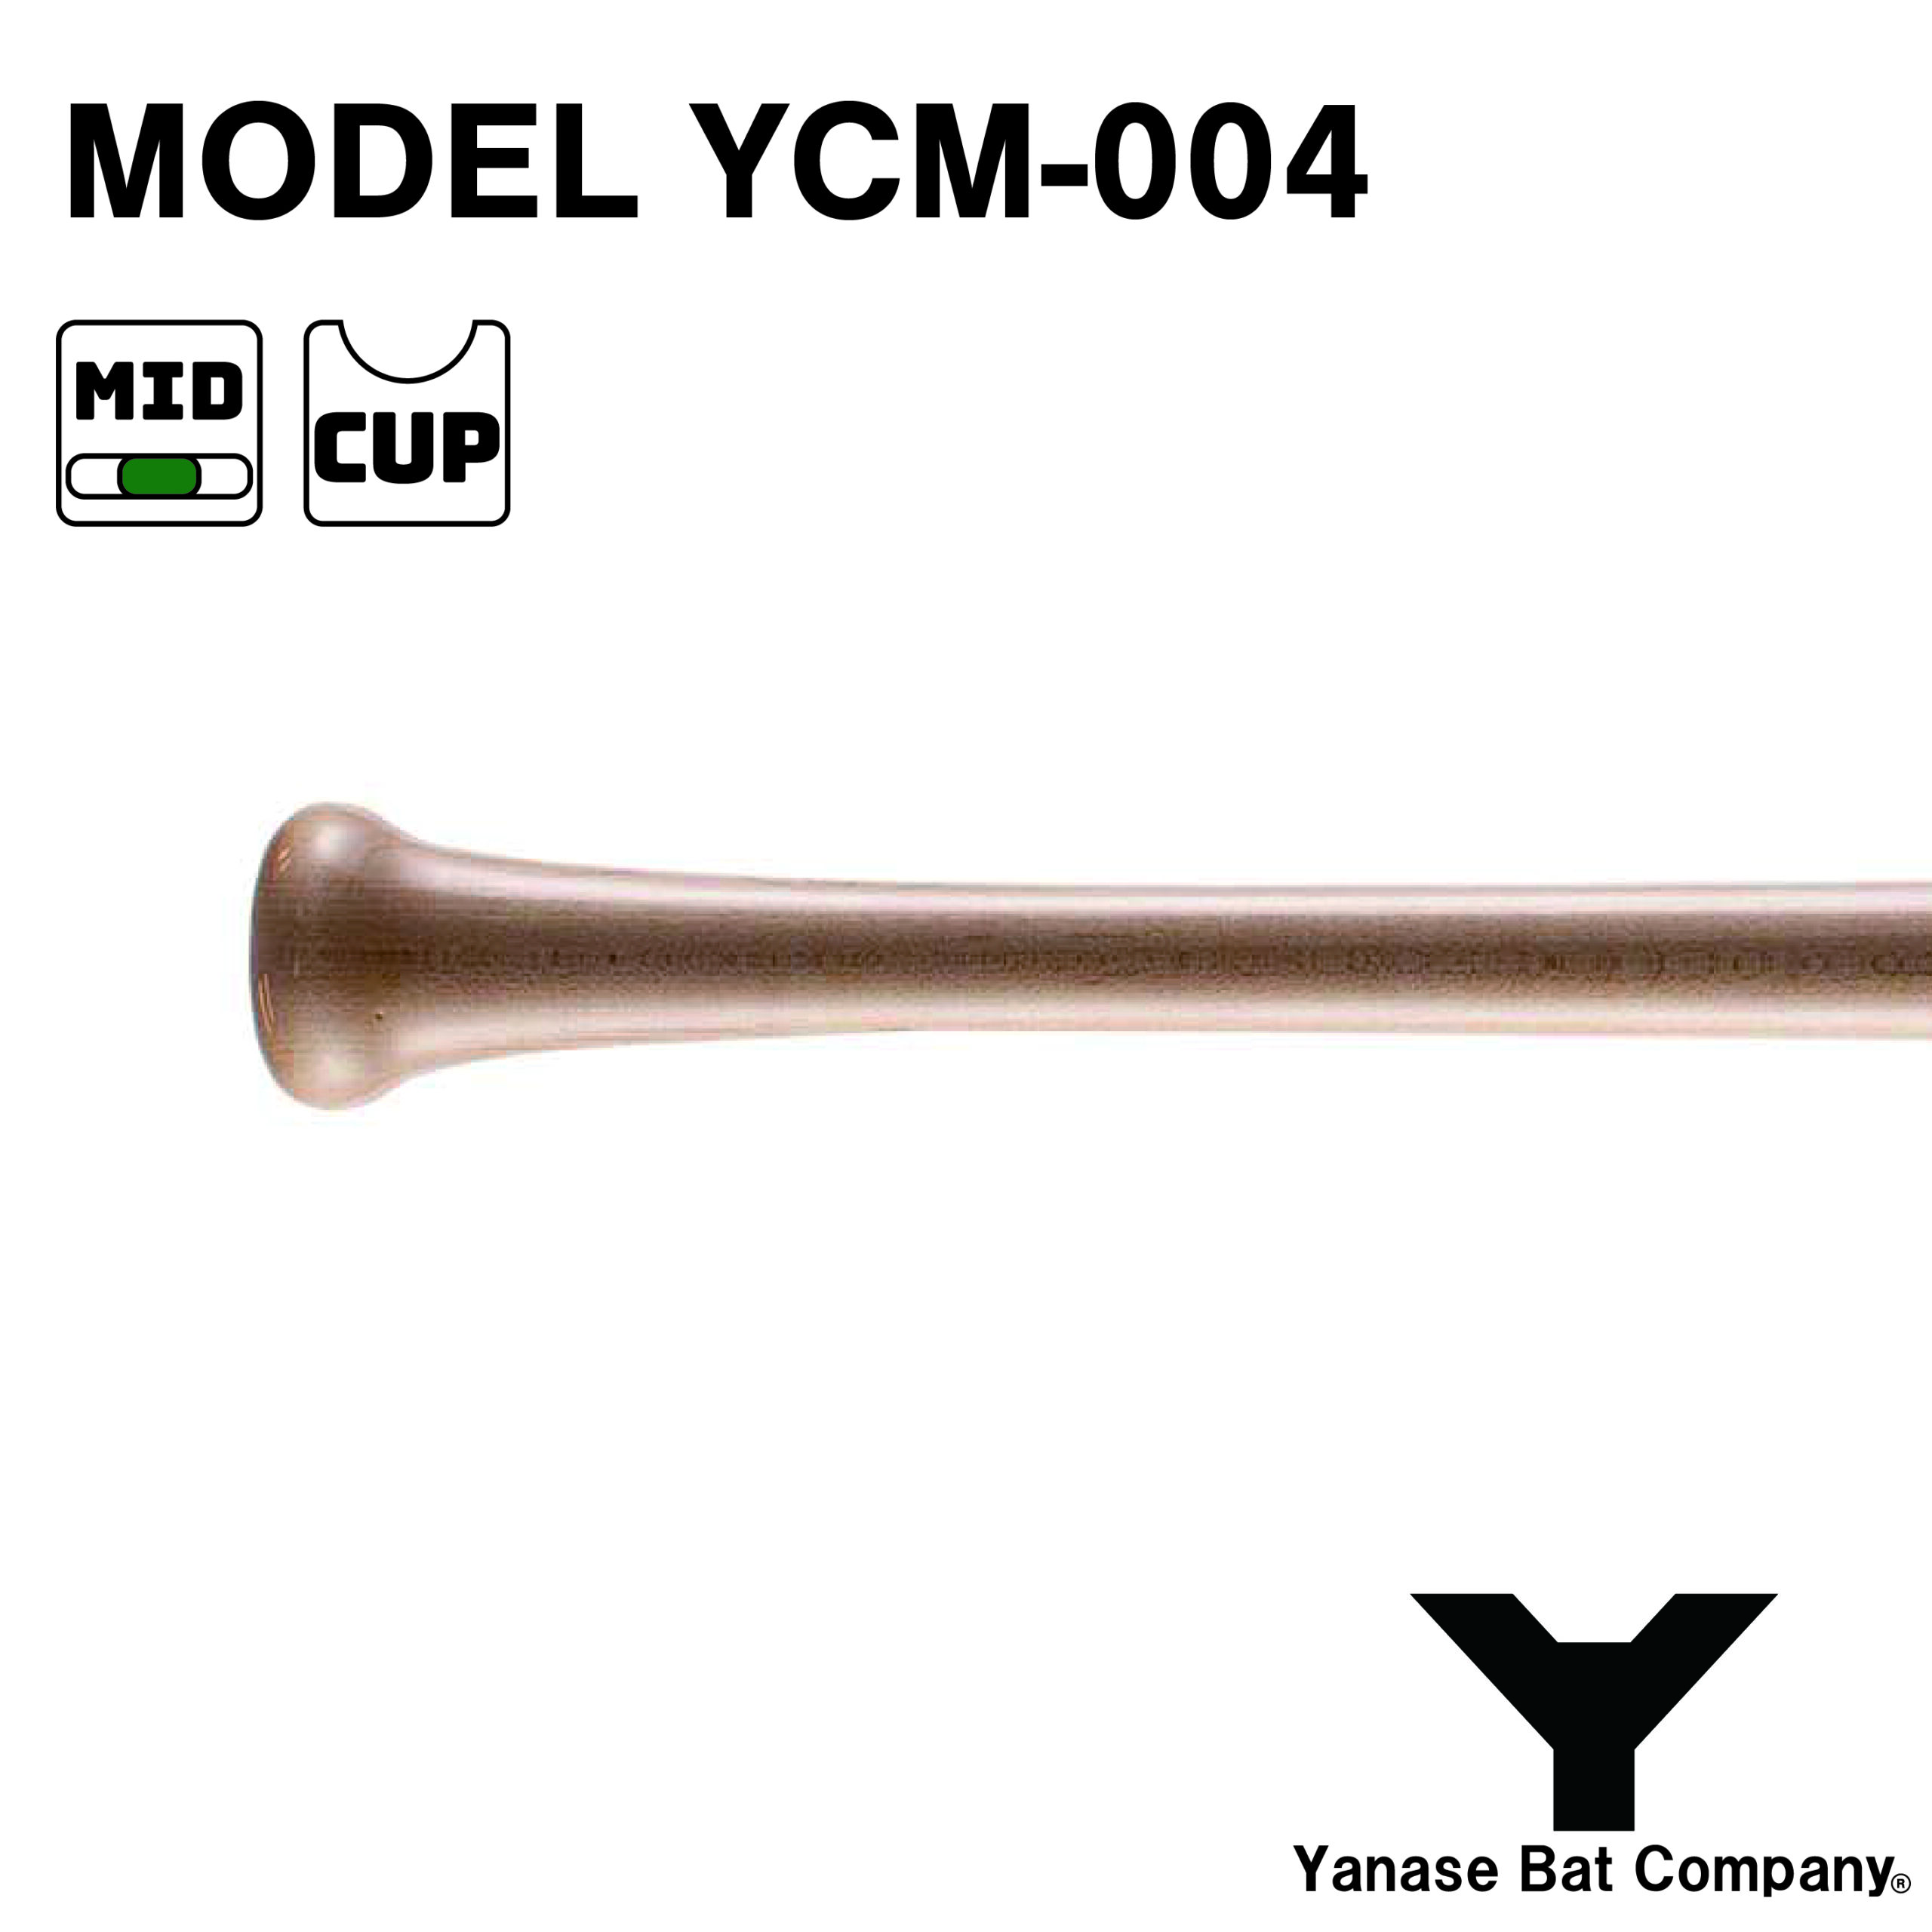 YCM-004 - YANASE BAT COMPANY